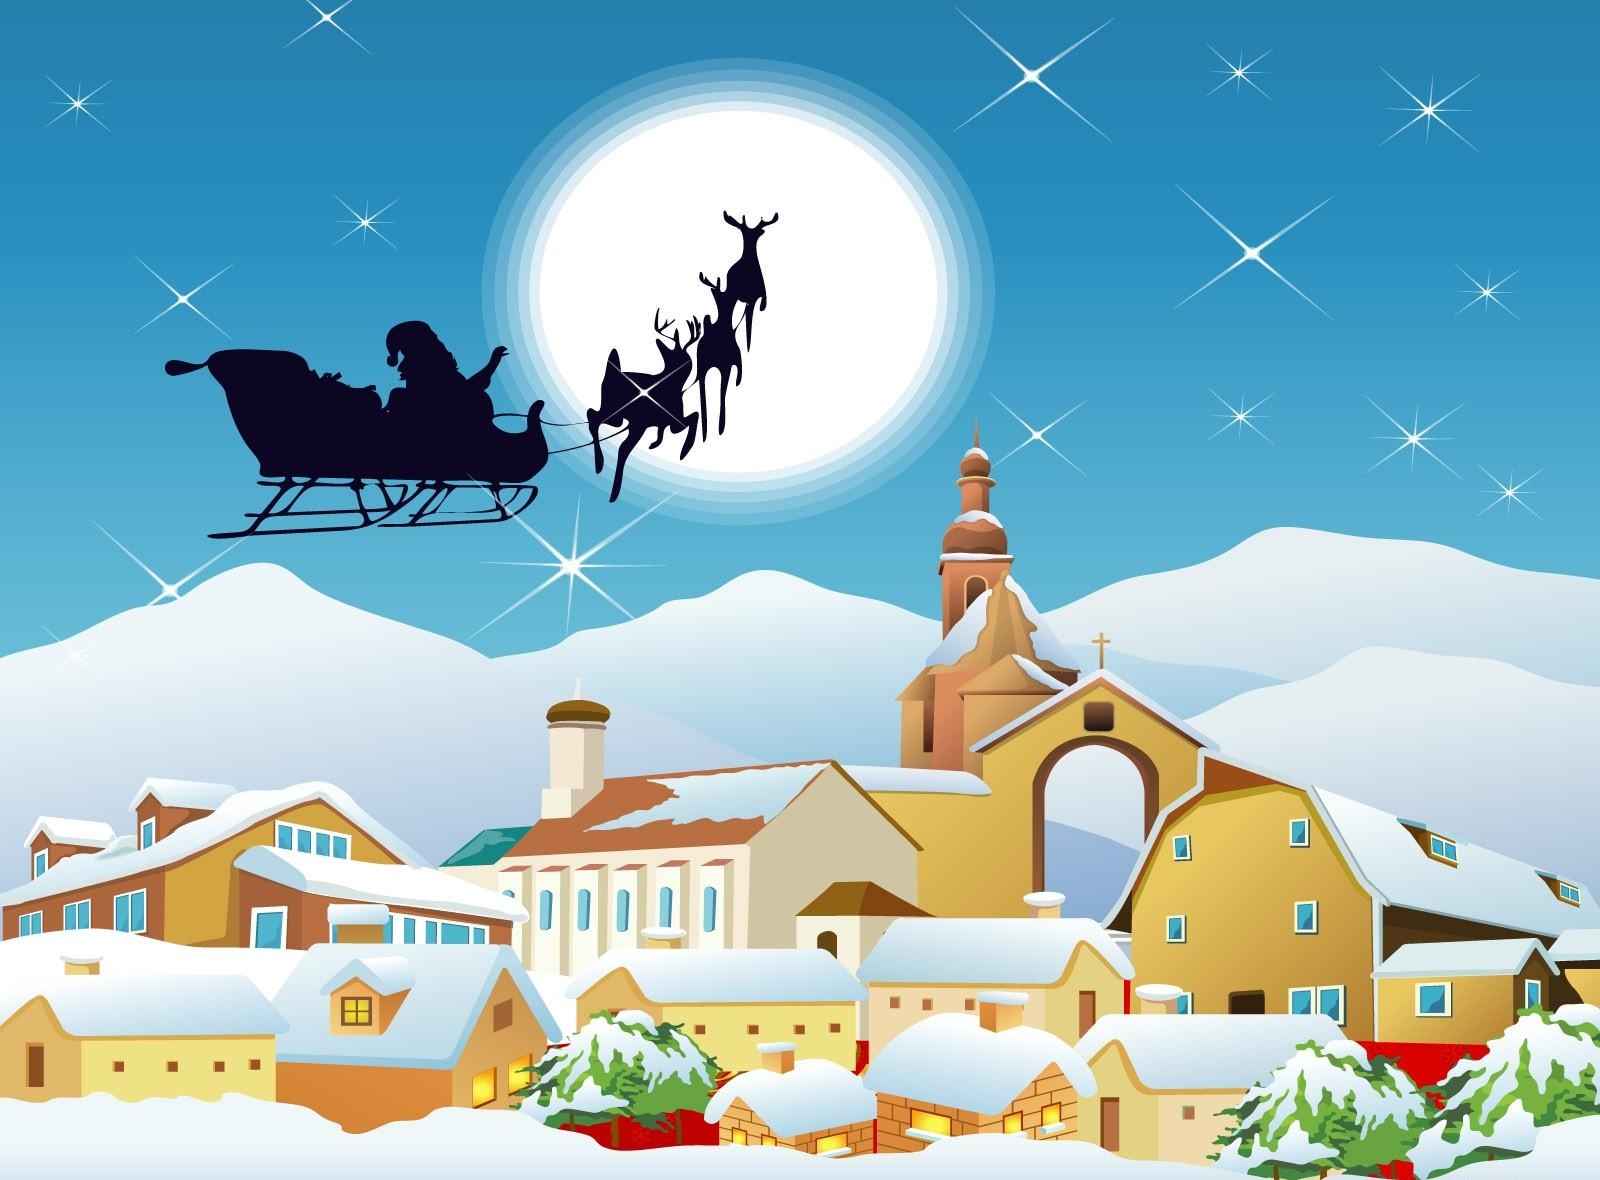 1920x1080 Background holidays, houses, santa claus, moon, city, flight, sleigh, sledge